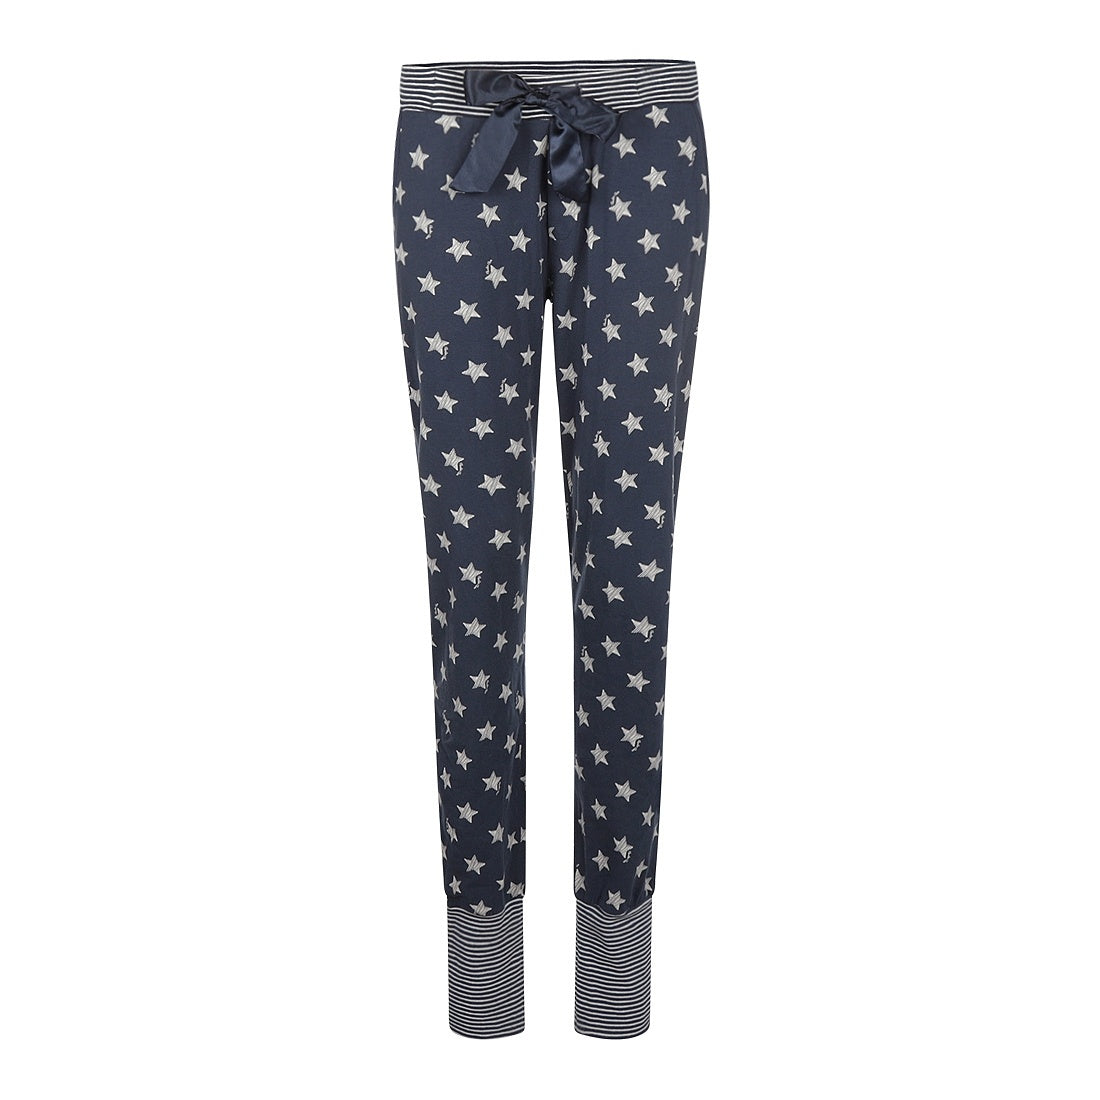 Charlie Choe Dames Pyjama broek - T47131-38 - Donker blauw sterren